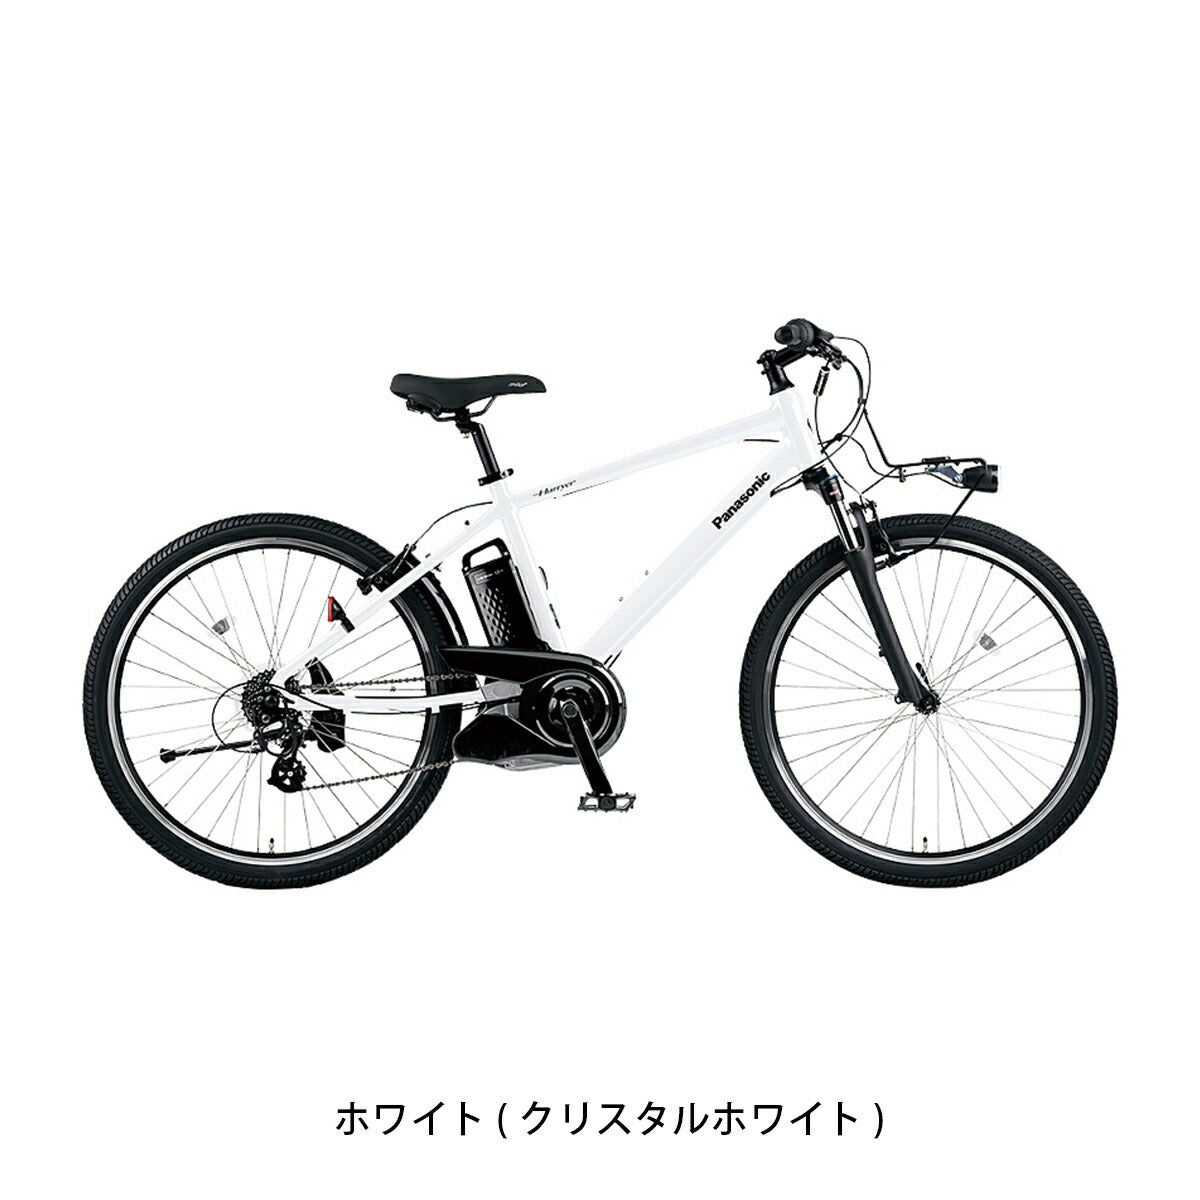 Panasonic 電動自転車 新基準 2倍アシスト - 自転車